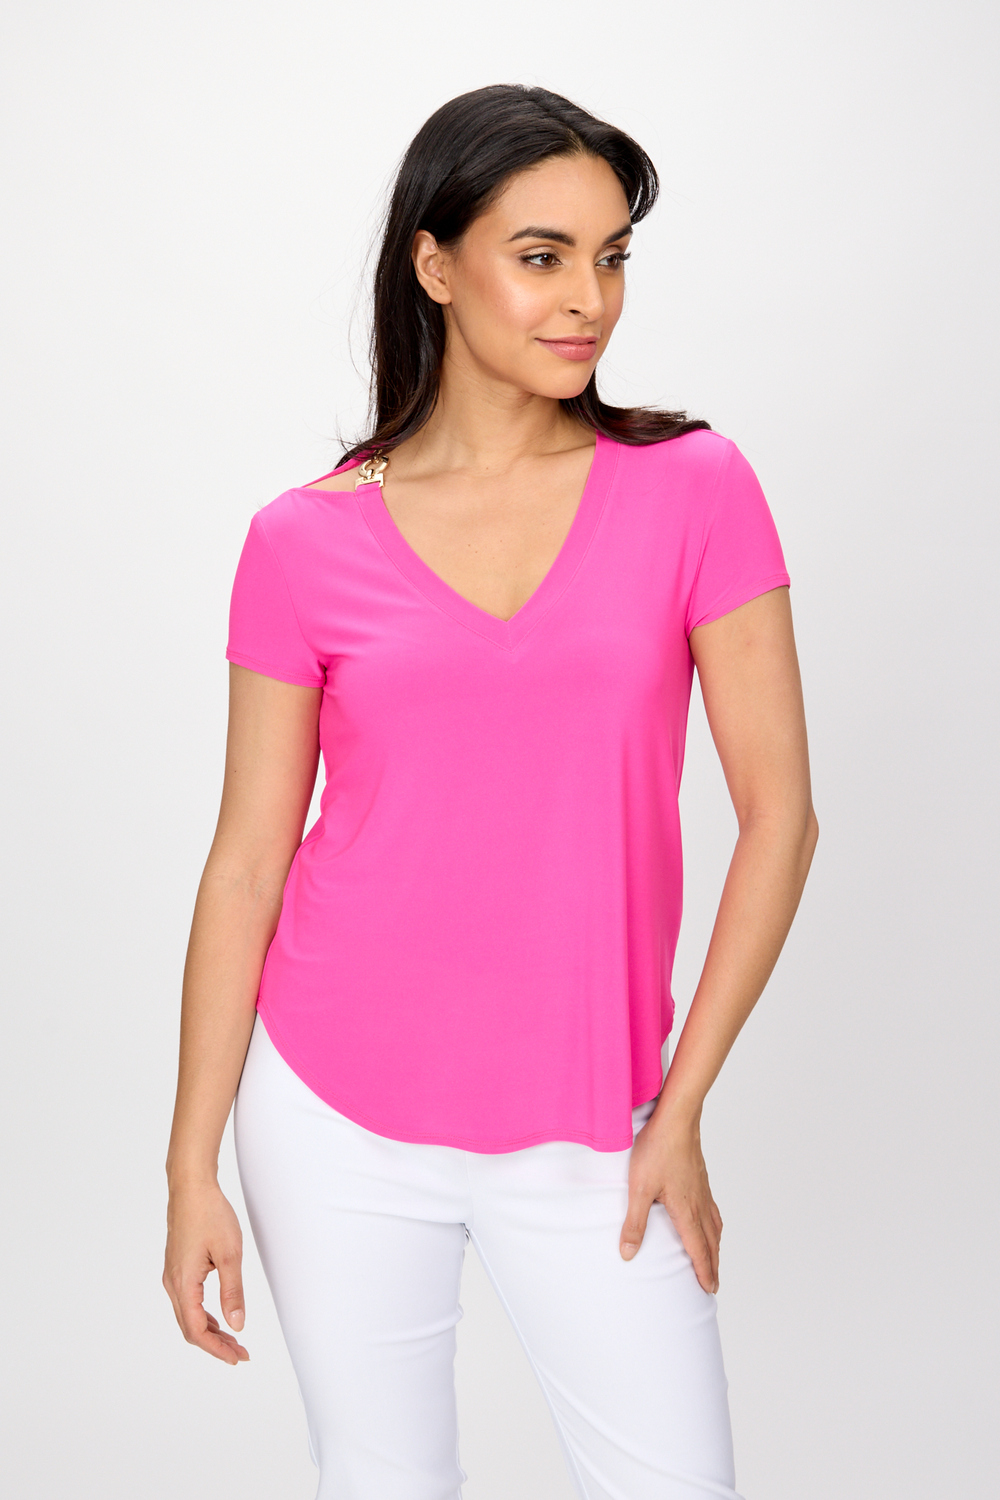 V-Neck T-Shirt Style 242217. Ultra Pink